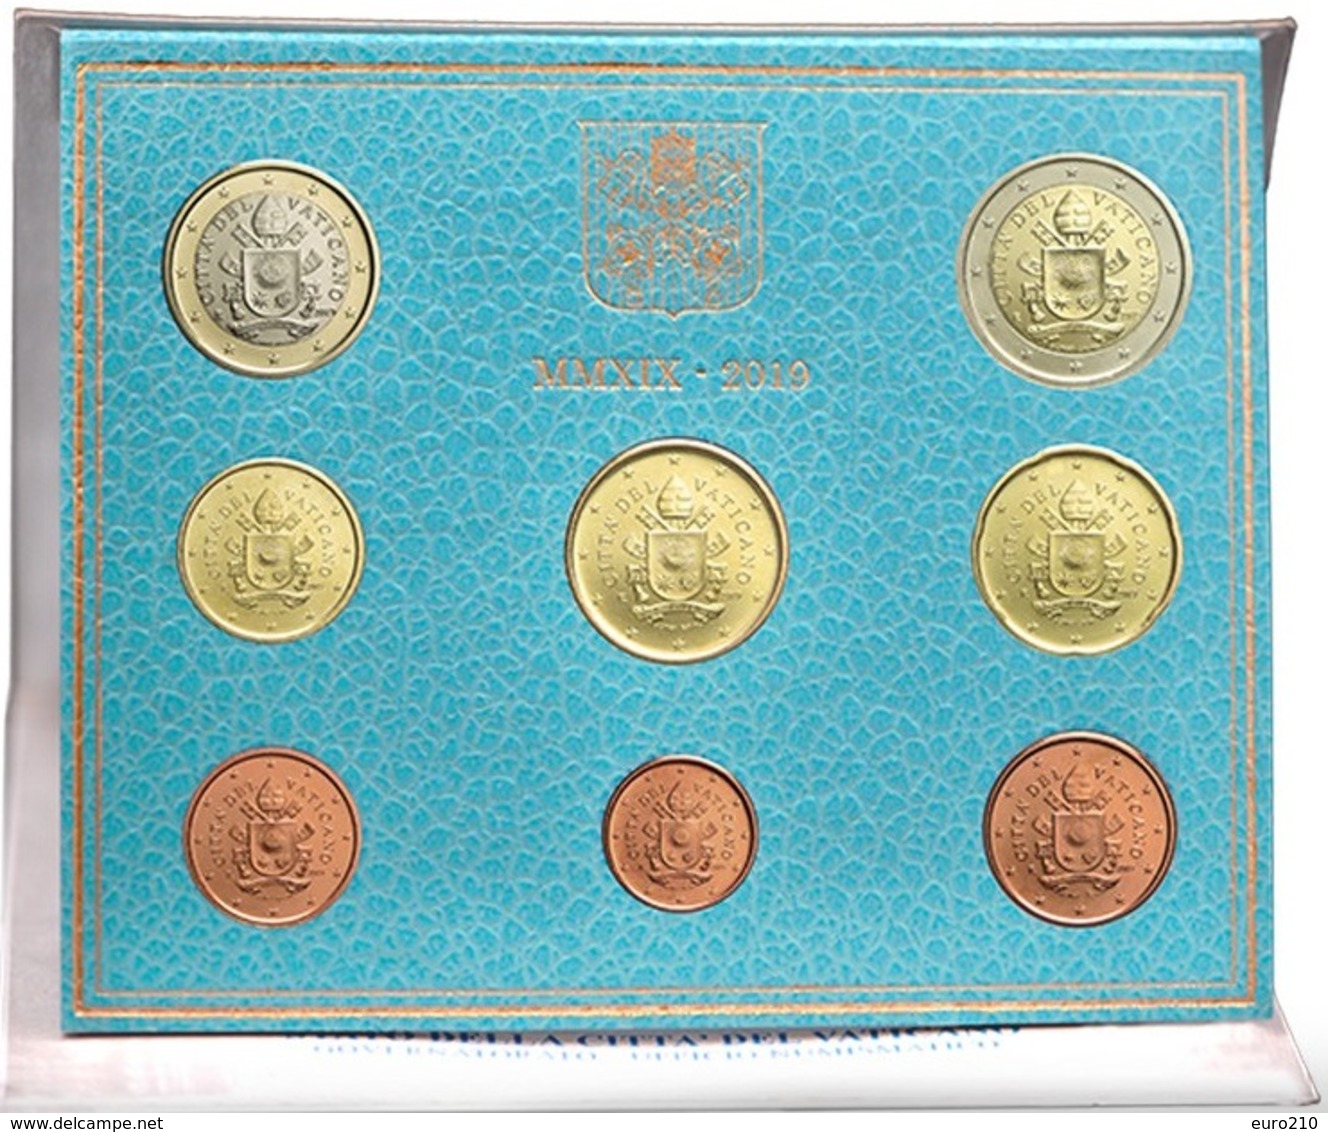 VATICAN EURO COIN SET 2019 - 8 Coins - BU Quality - Vatican